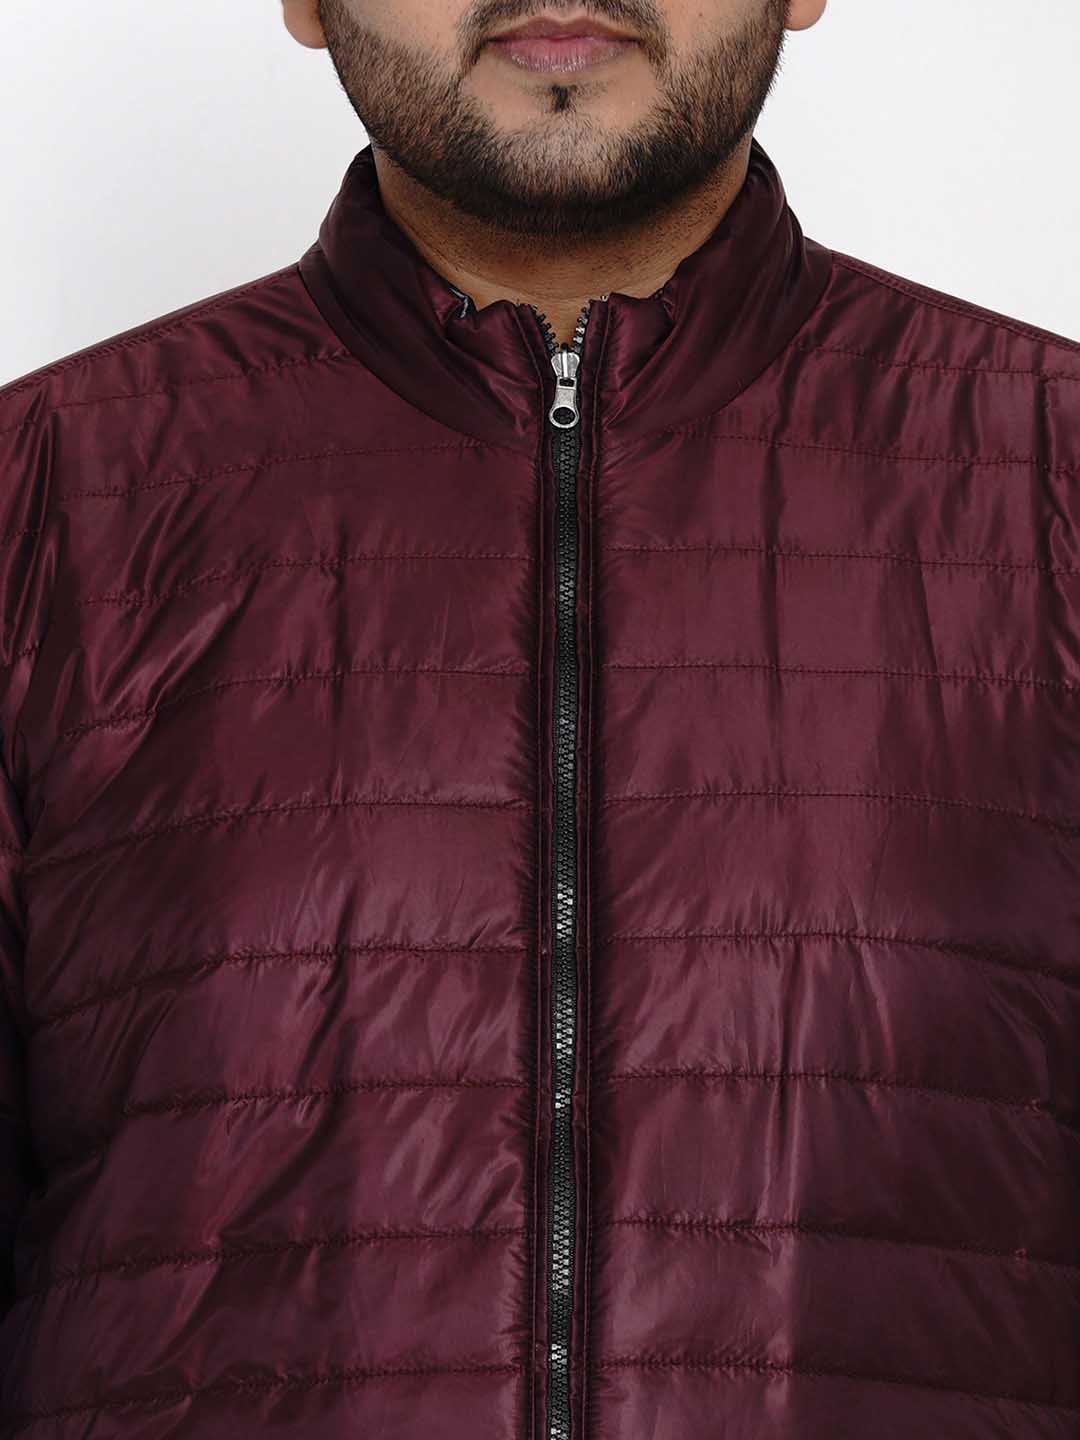 winterwear/jackets/JPJKT7387/jpjkt7387-5.jpg